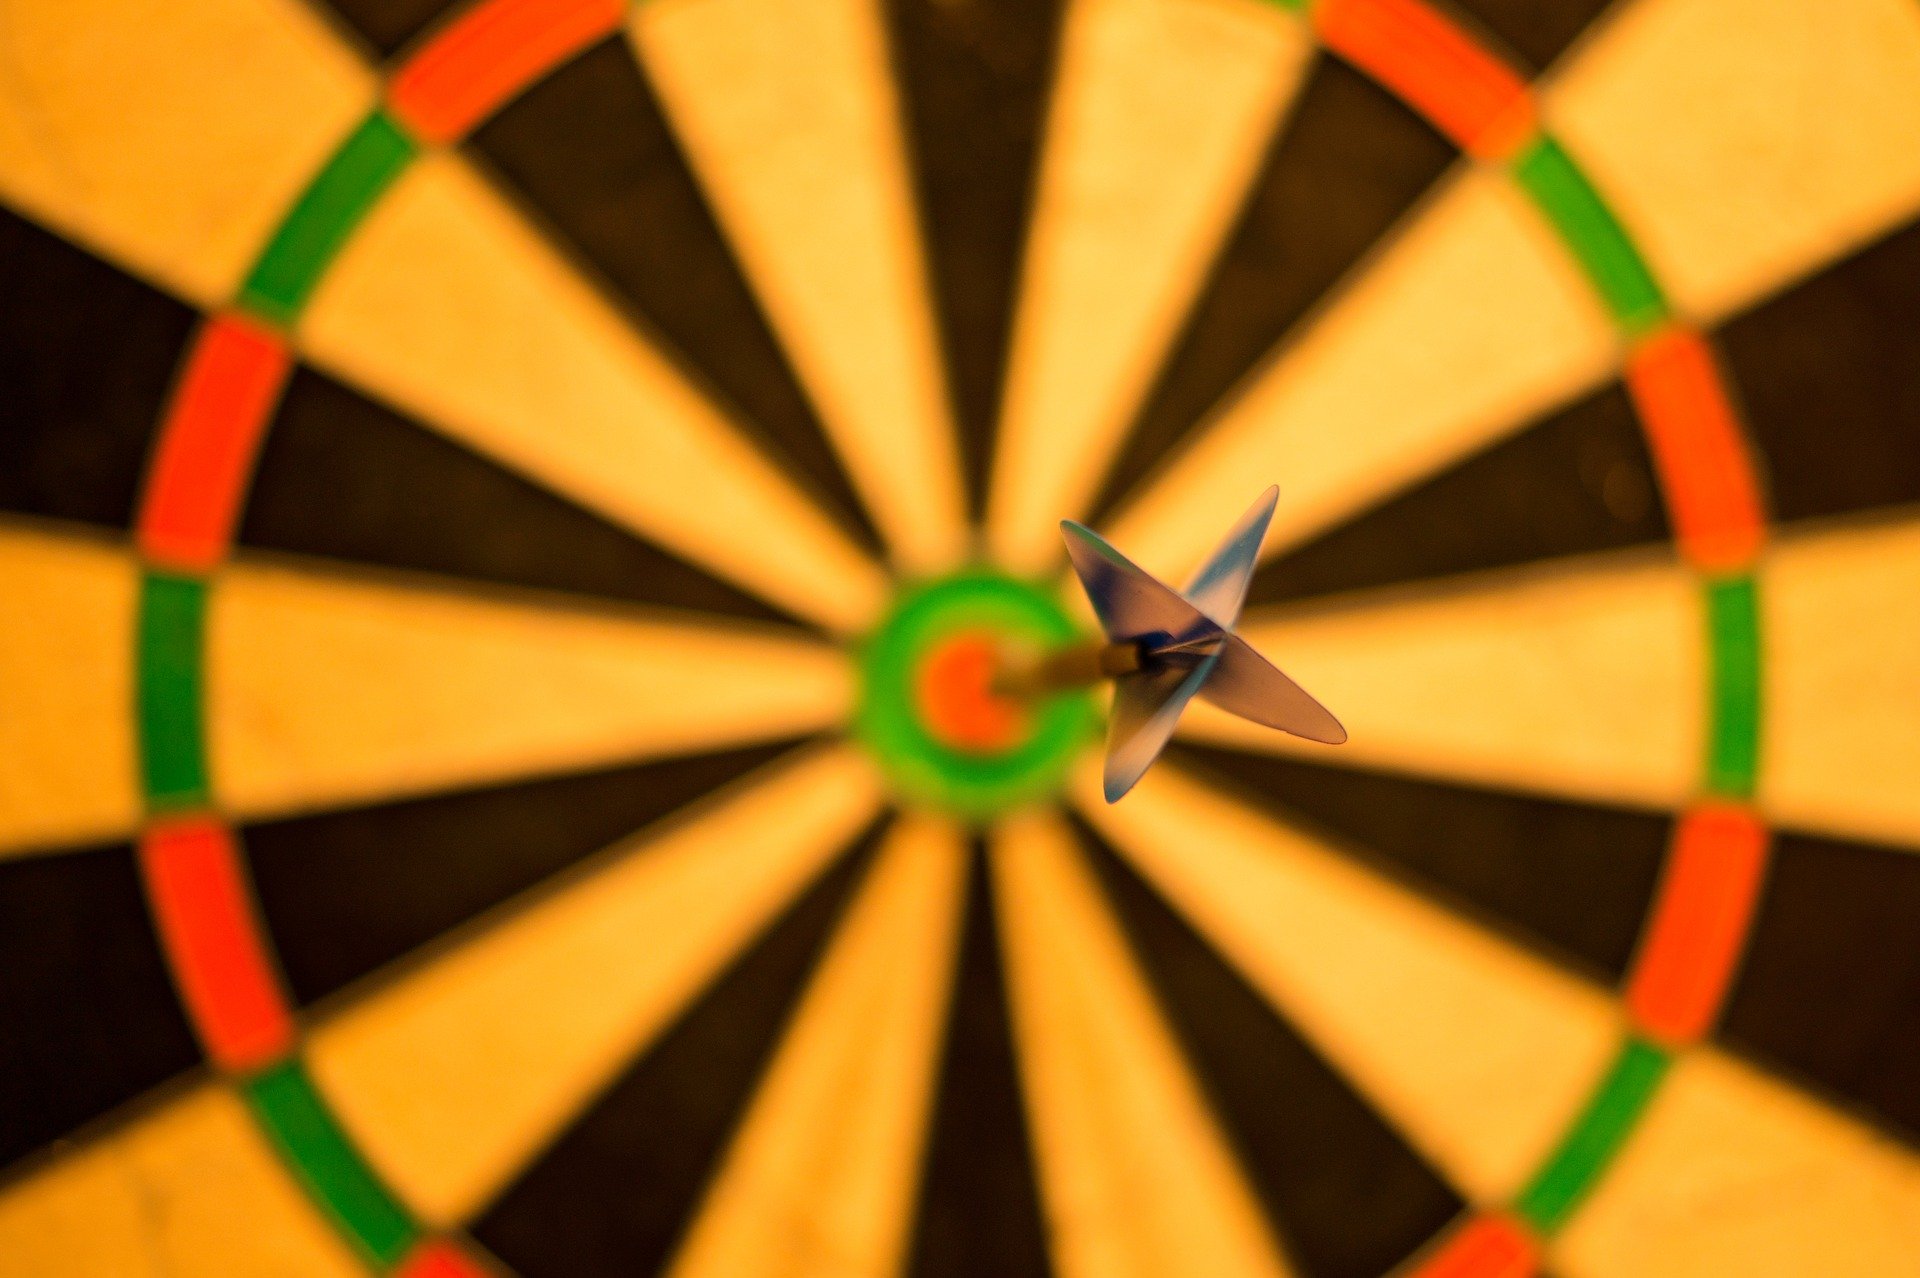 Blurry dart board image with a dart in the bullseye